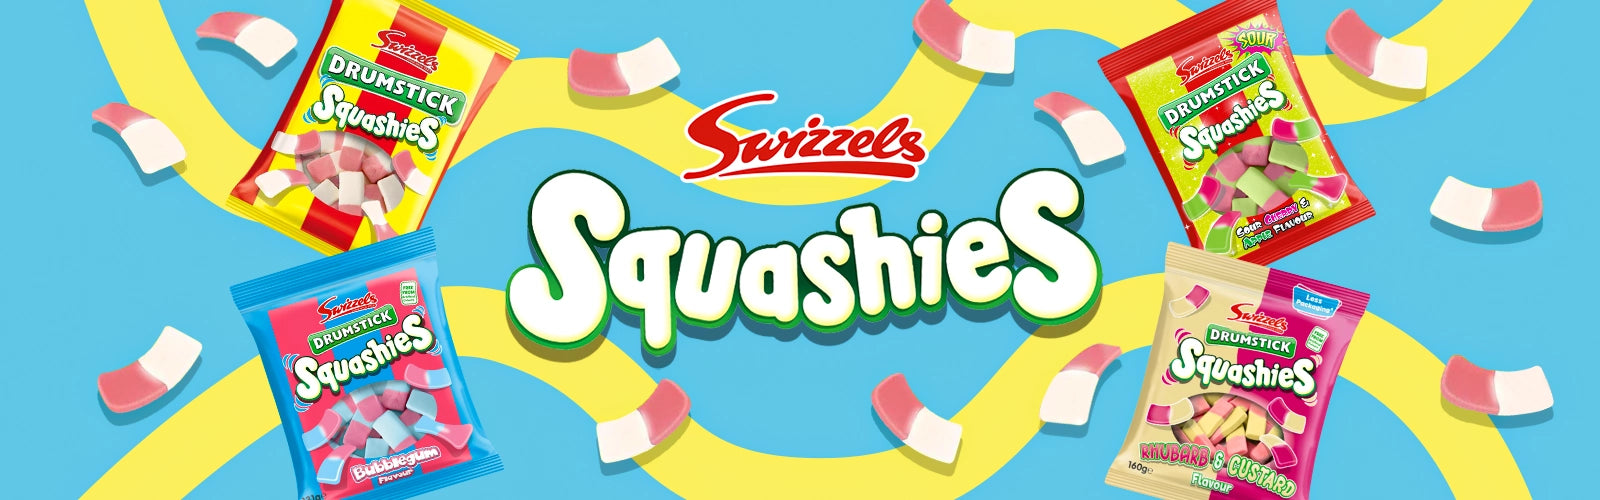 Squashies Banner